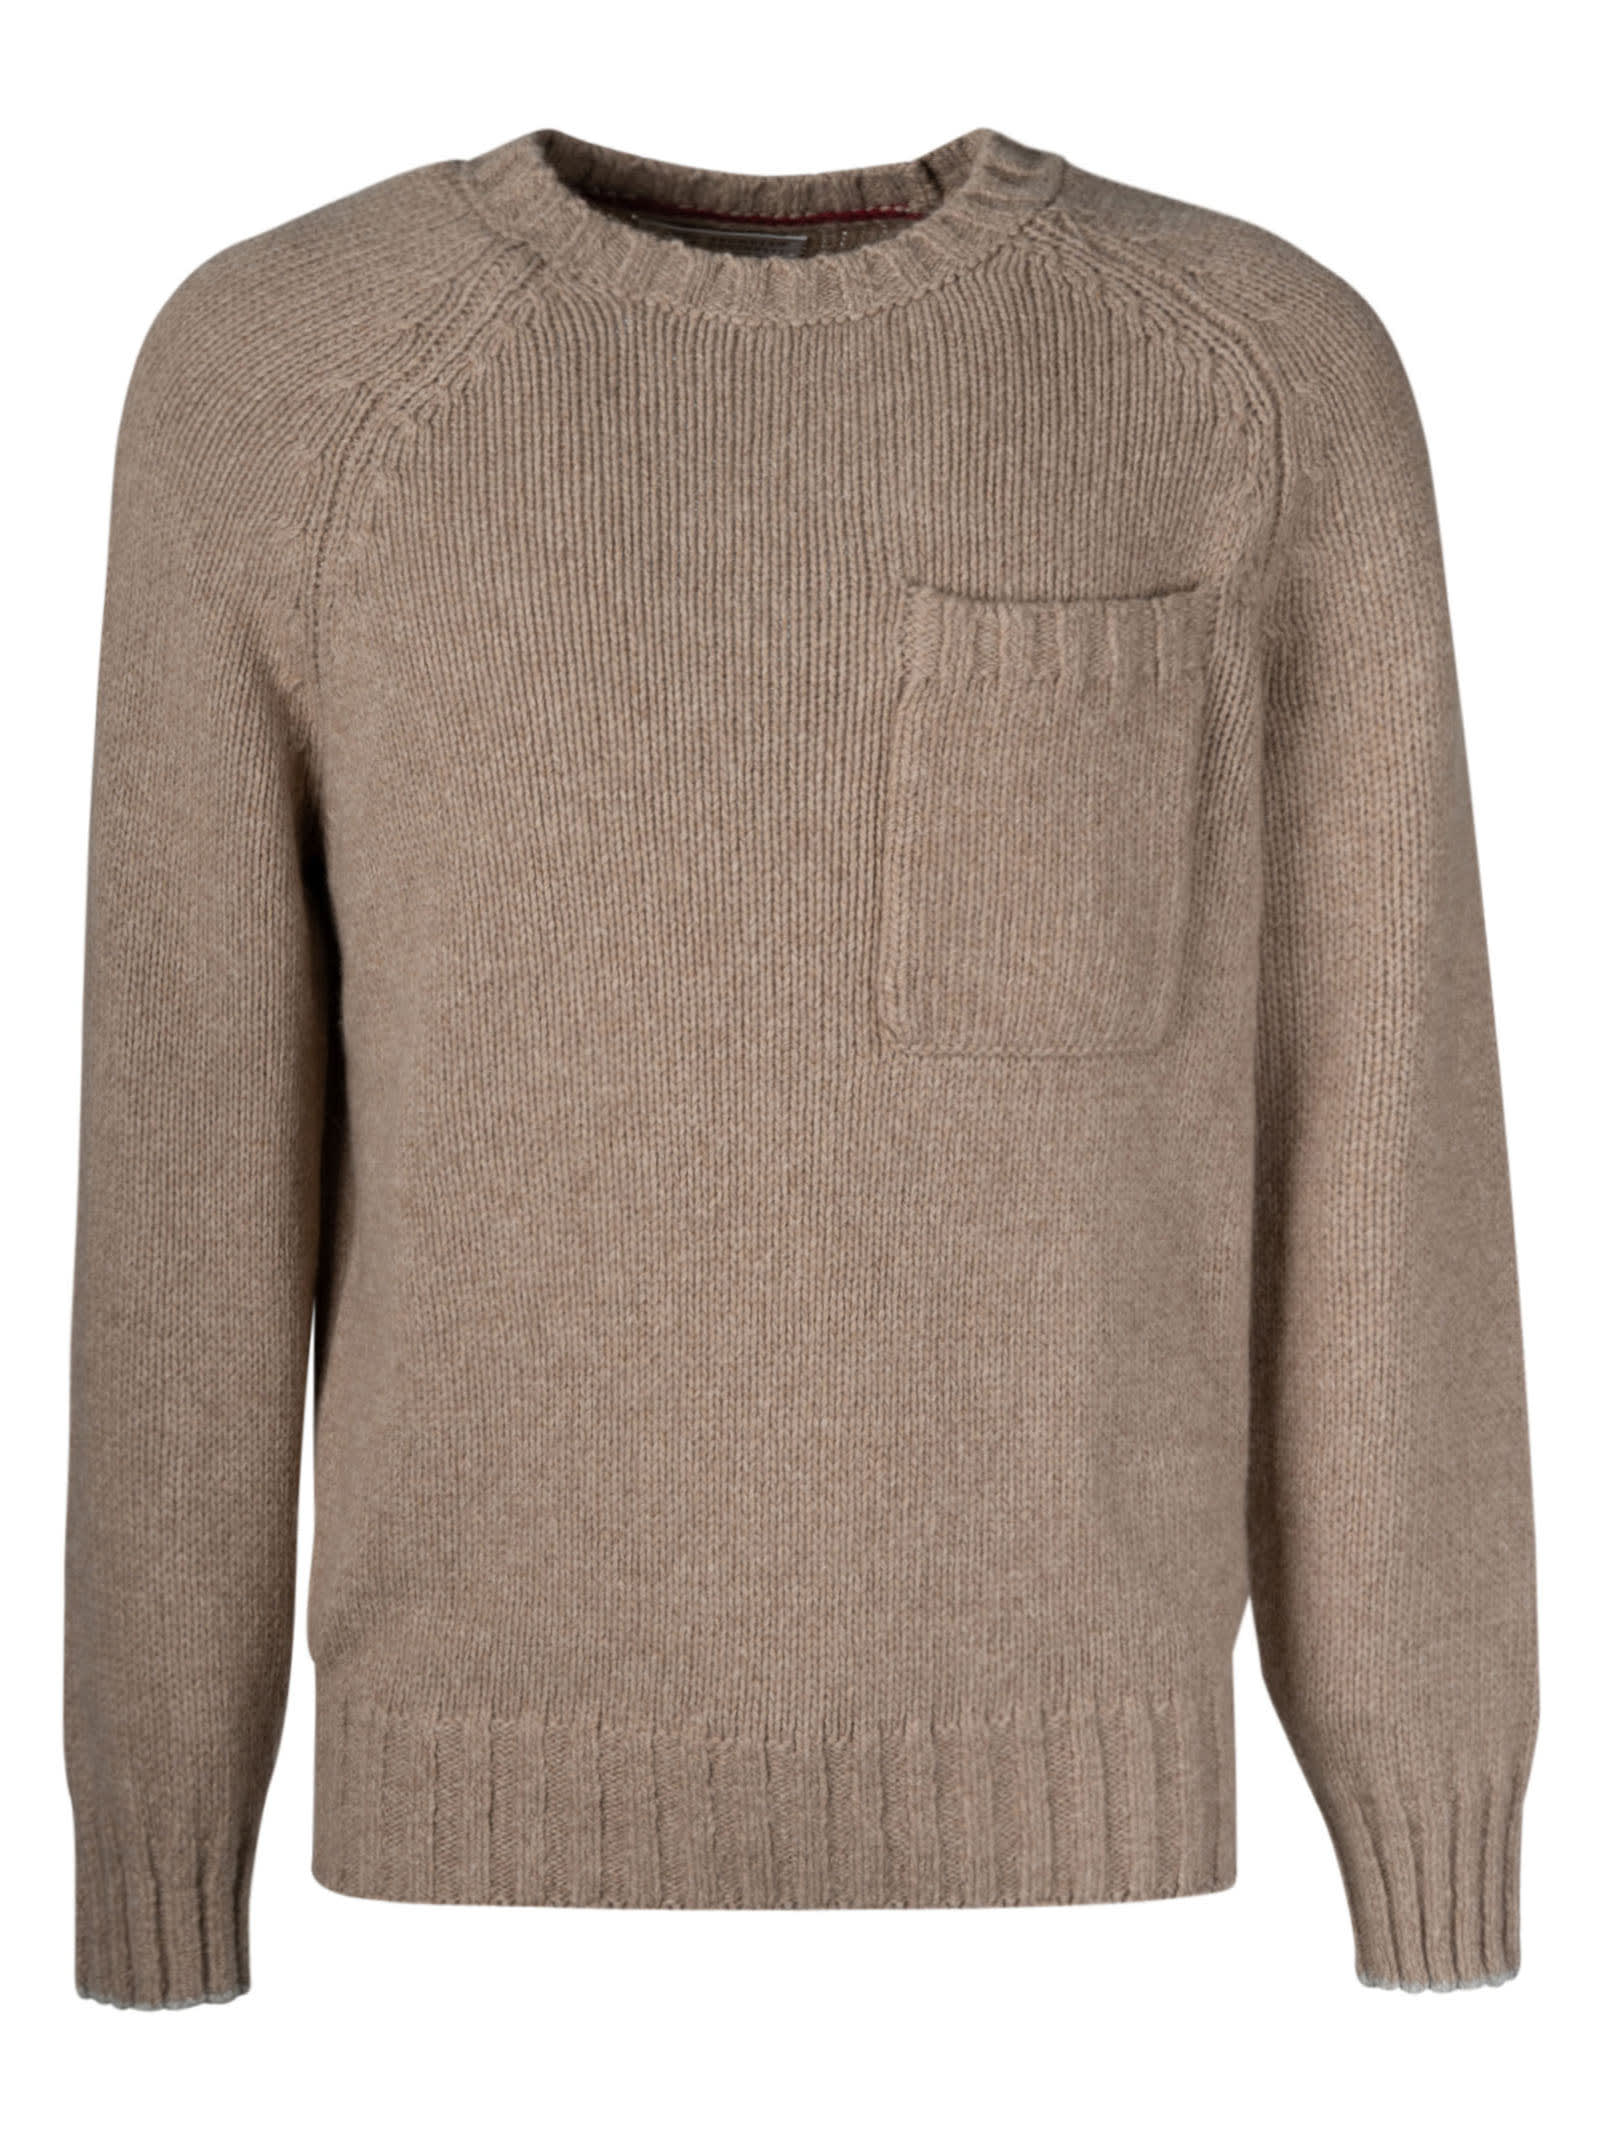 Brunello Cucinelli Patched Pocket Plain Knit Sweater